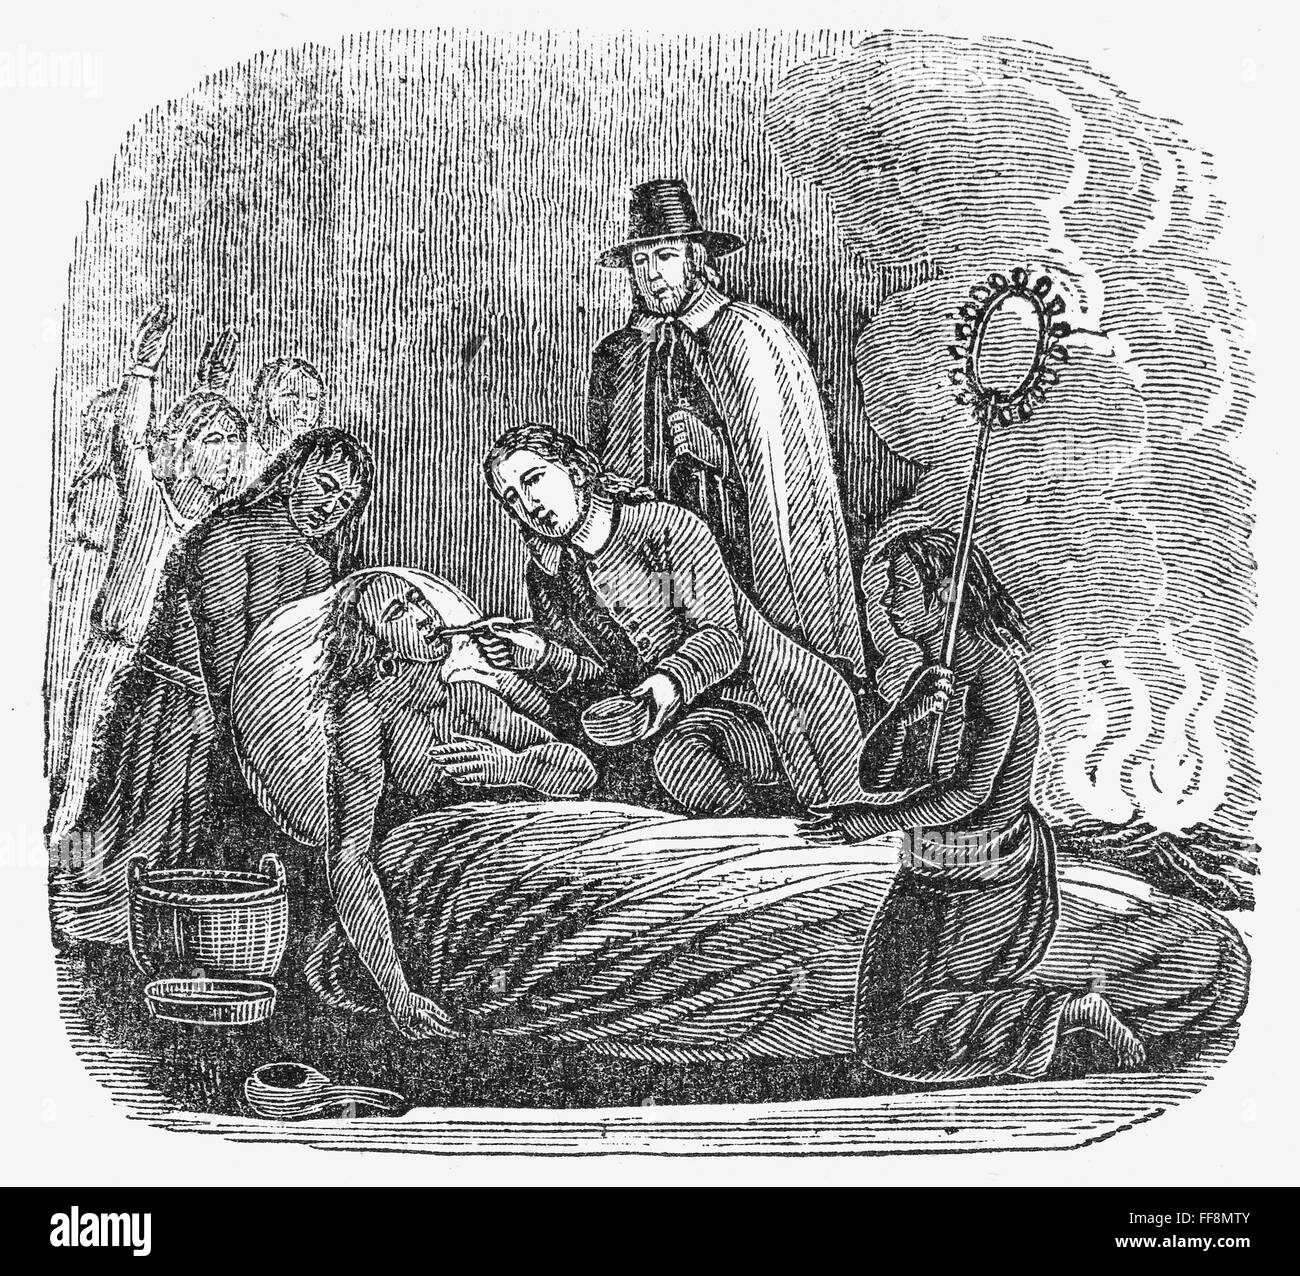 PLYMOUTH: MASSASOIT, 1623. /nEdward Winslow and John Hambden of Plymouth Colony nursing Massasoit on his sickbed, 1623. Wood engraving, 1853. Stock Photo